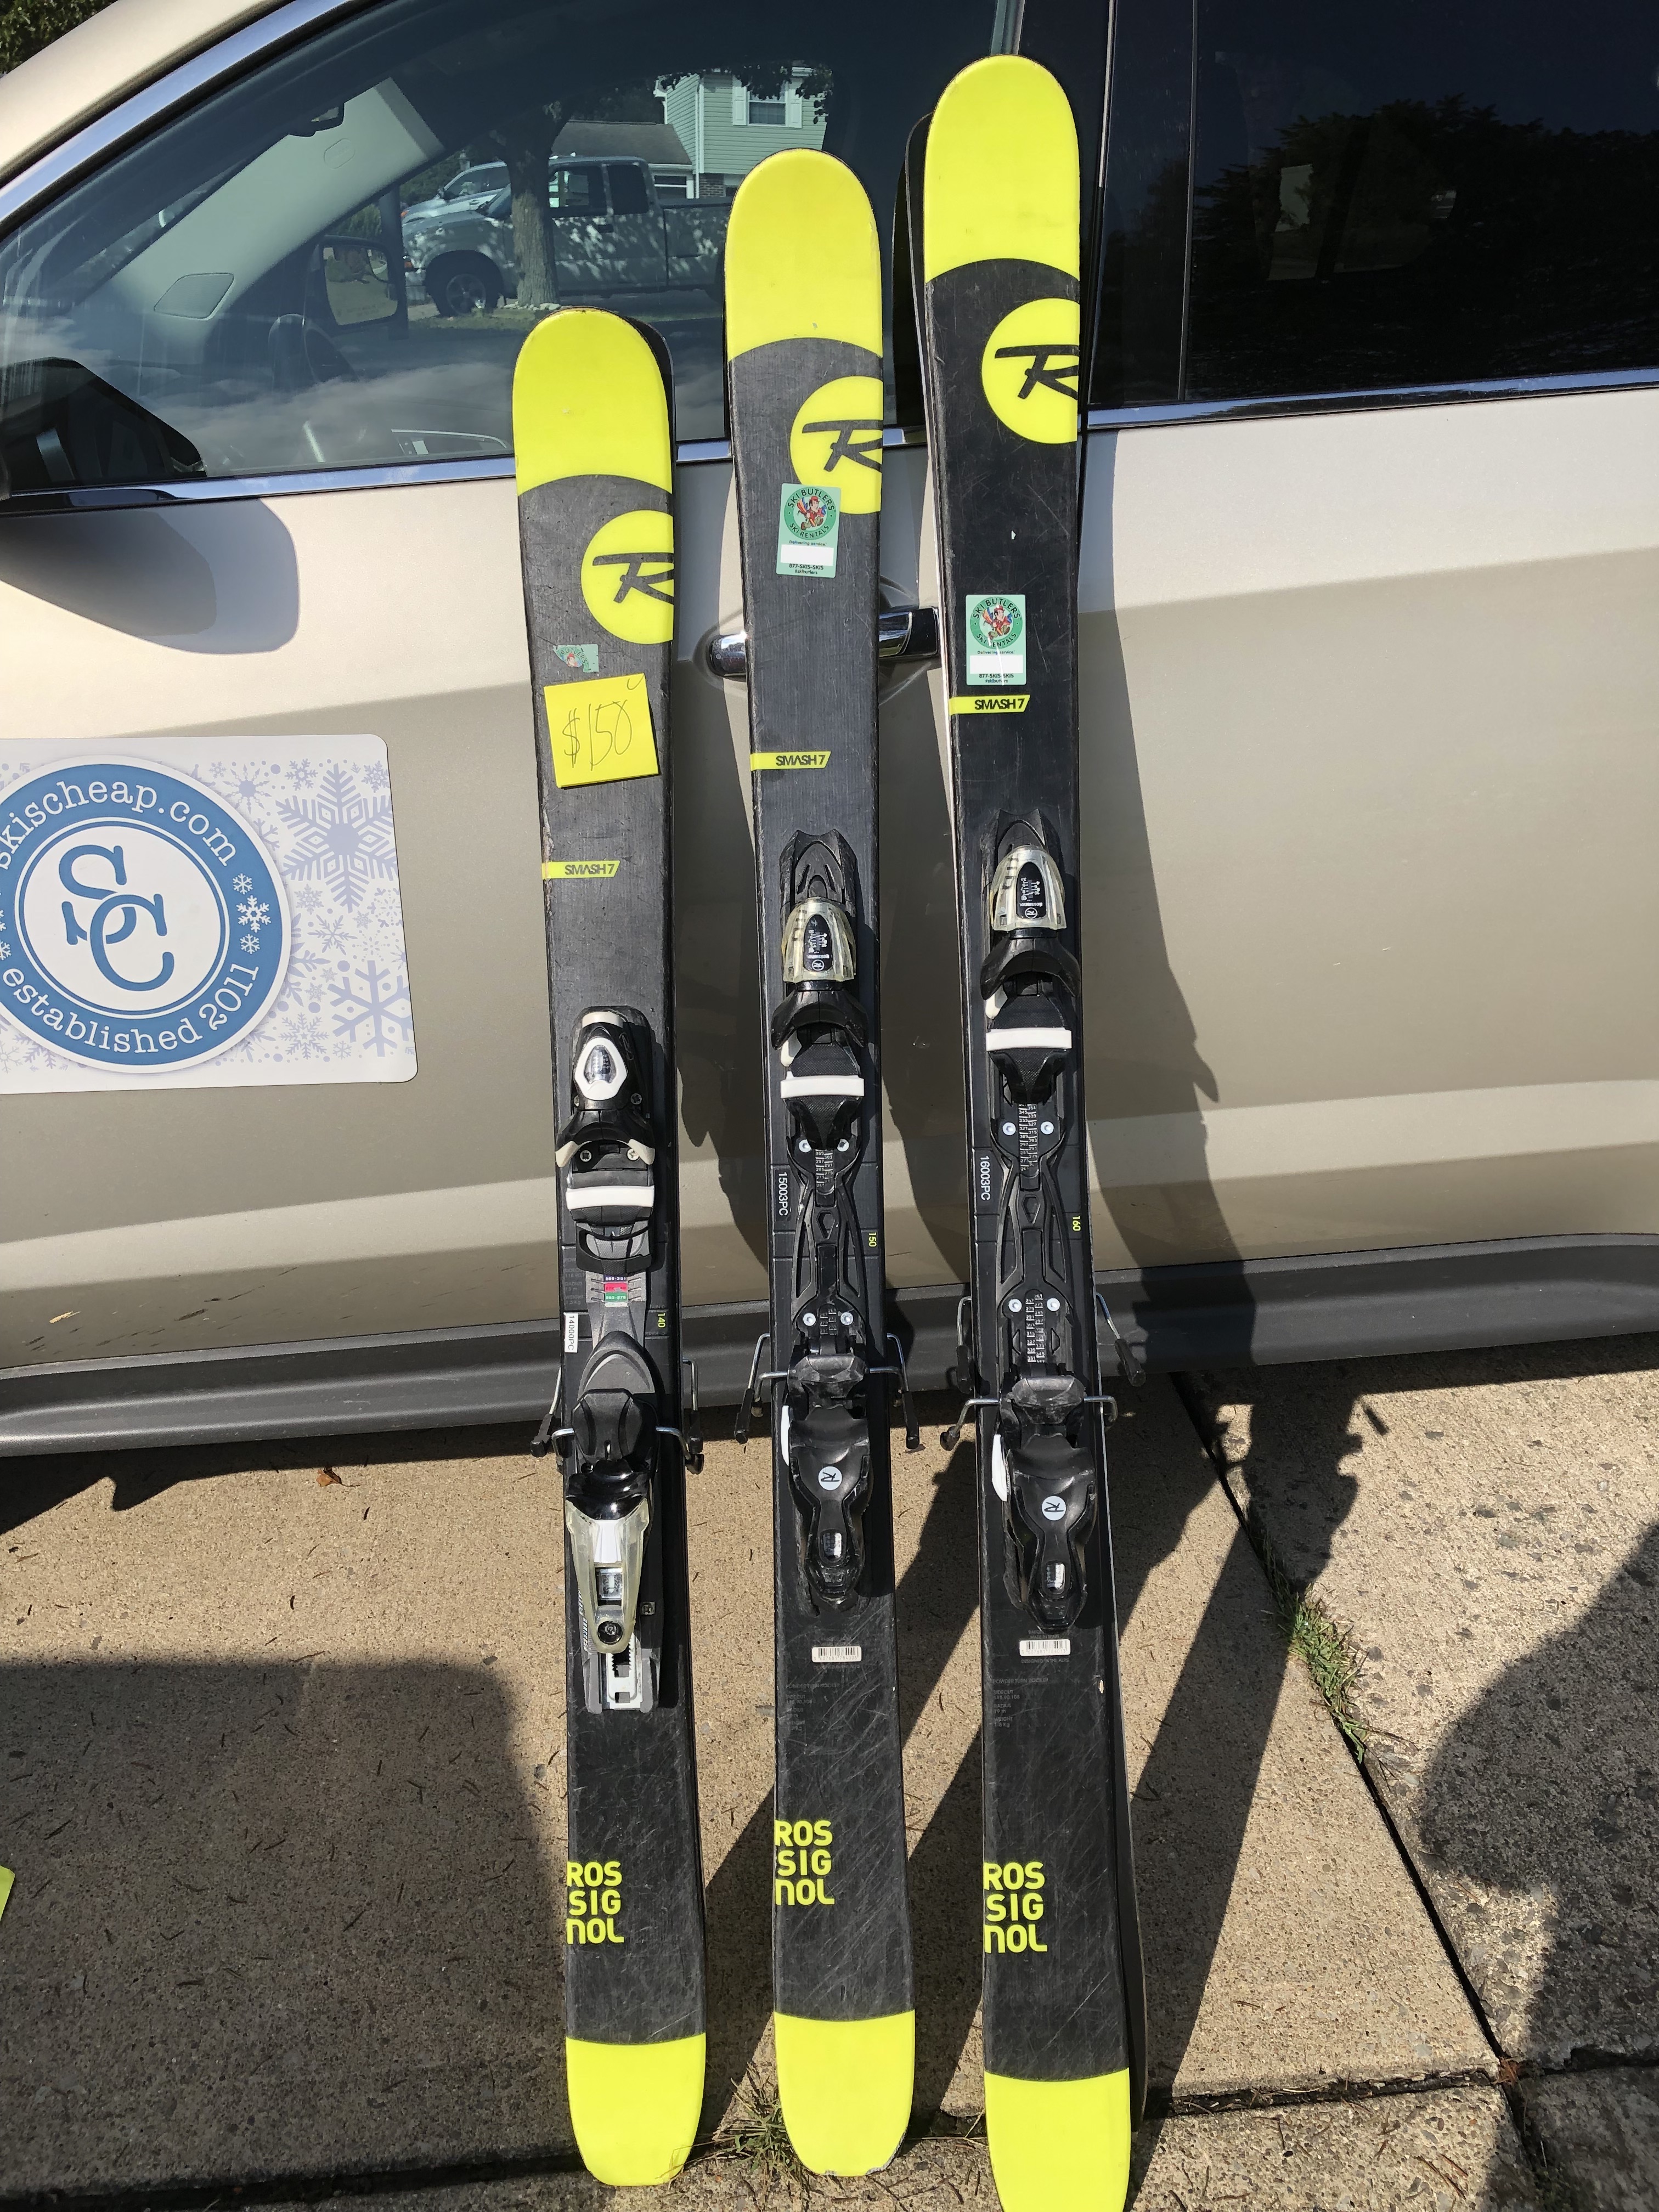 rossignol smash 7 skis